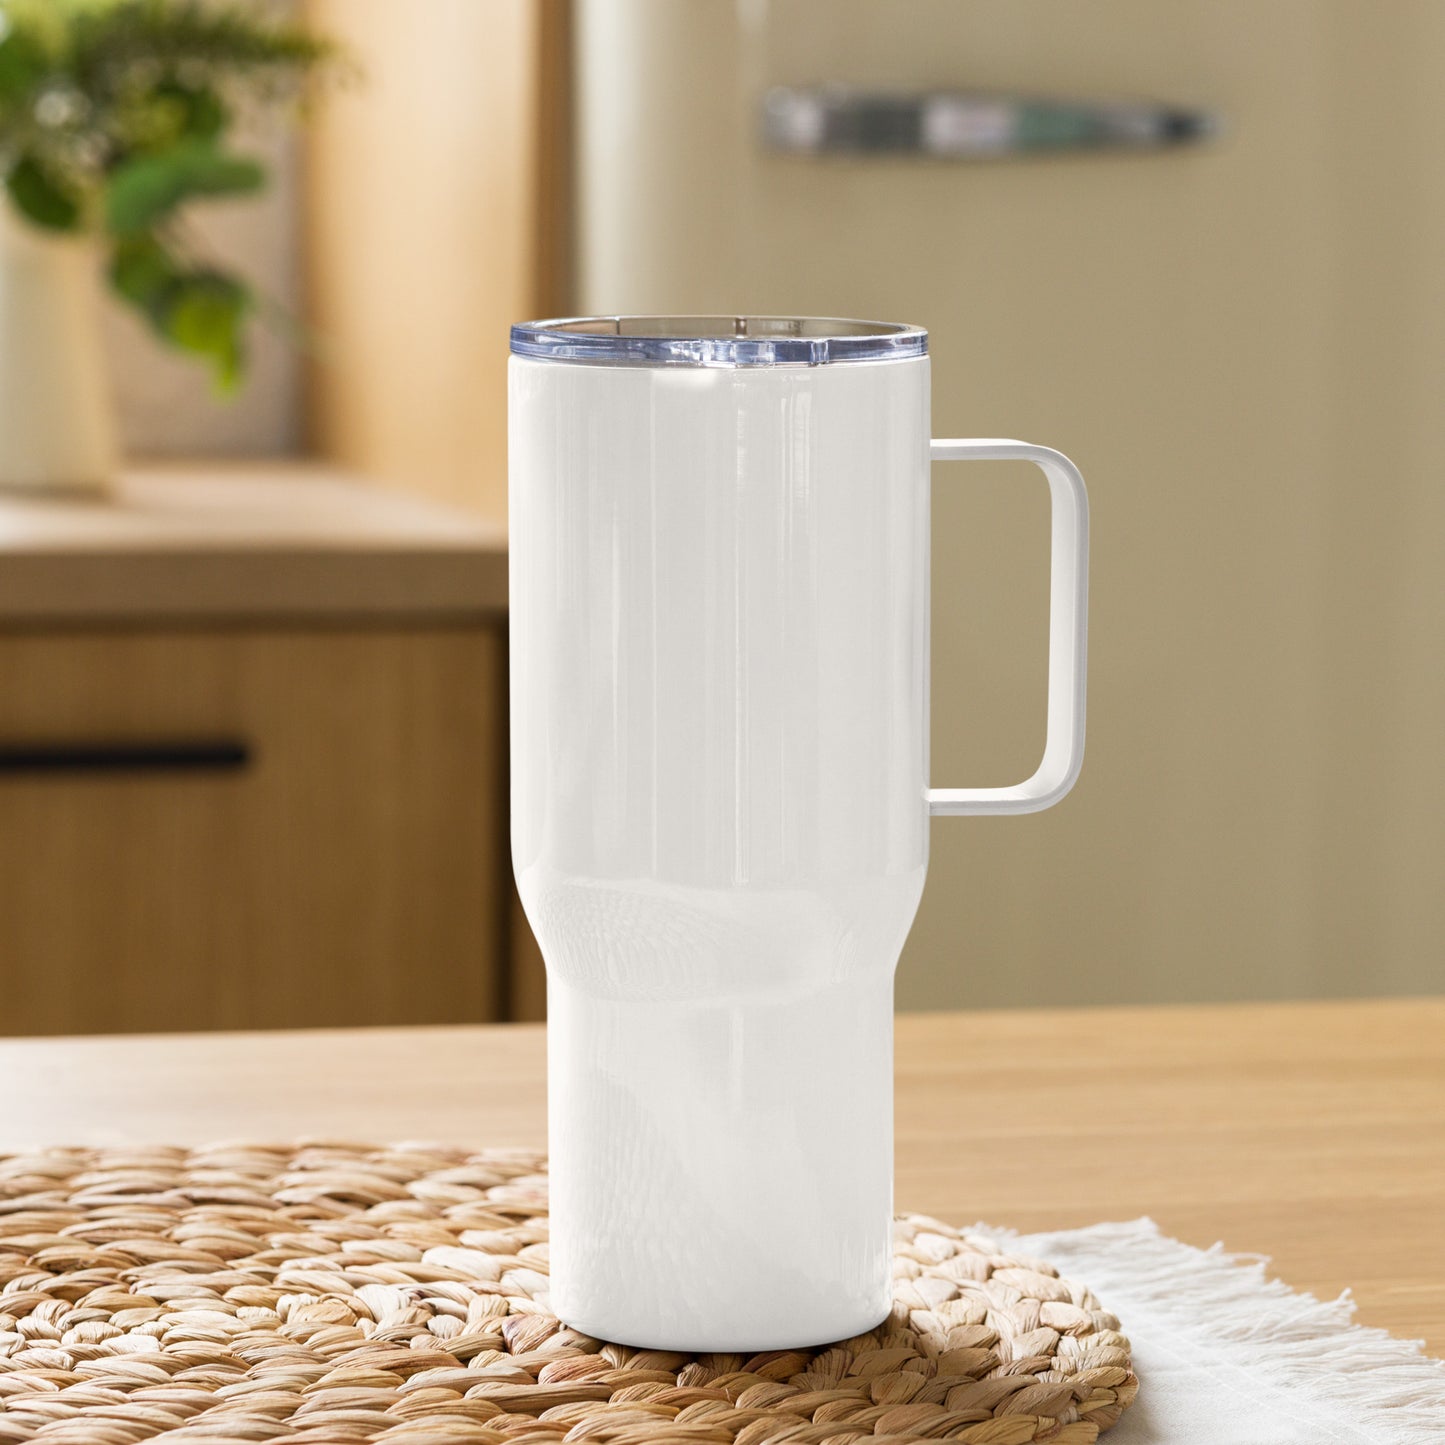 Virgo energy Travel mug with a handle